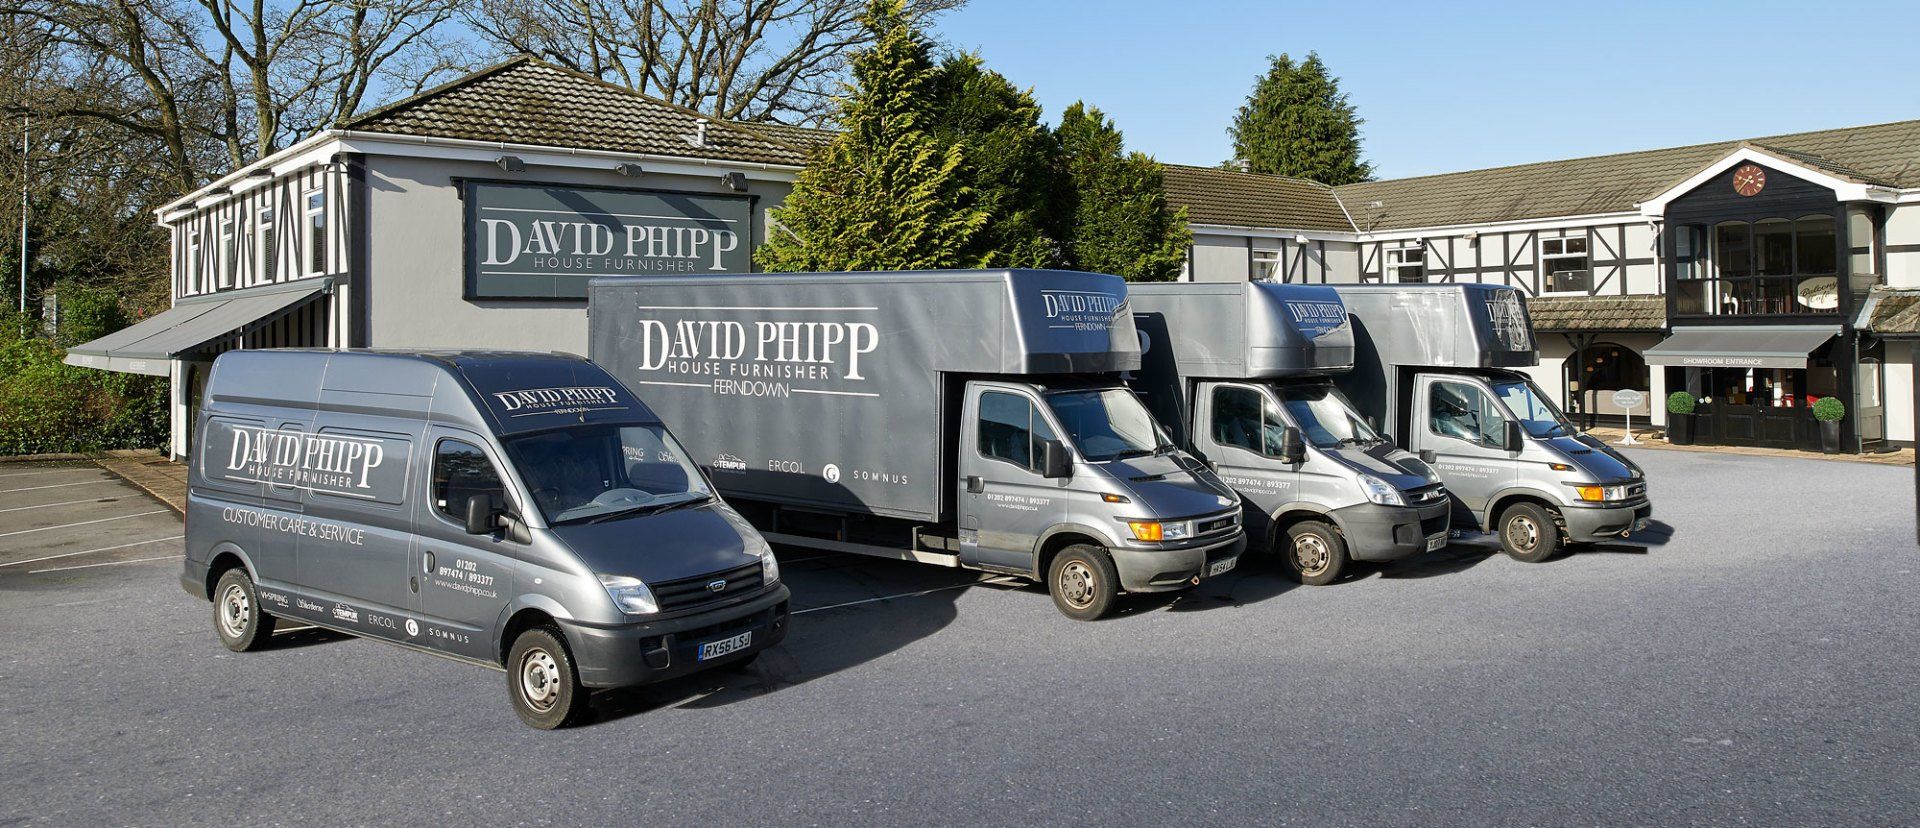 David Phipp Delivery Vans at the Showroom in Ferndown